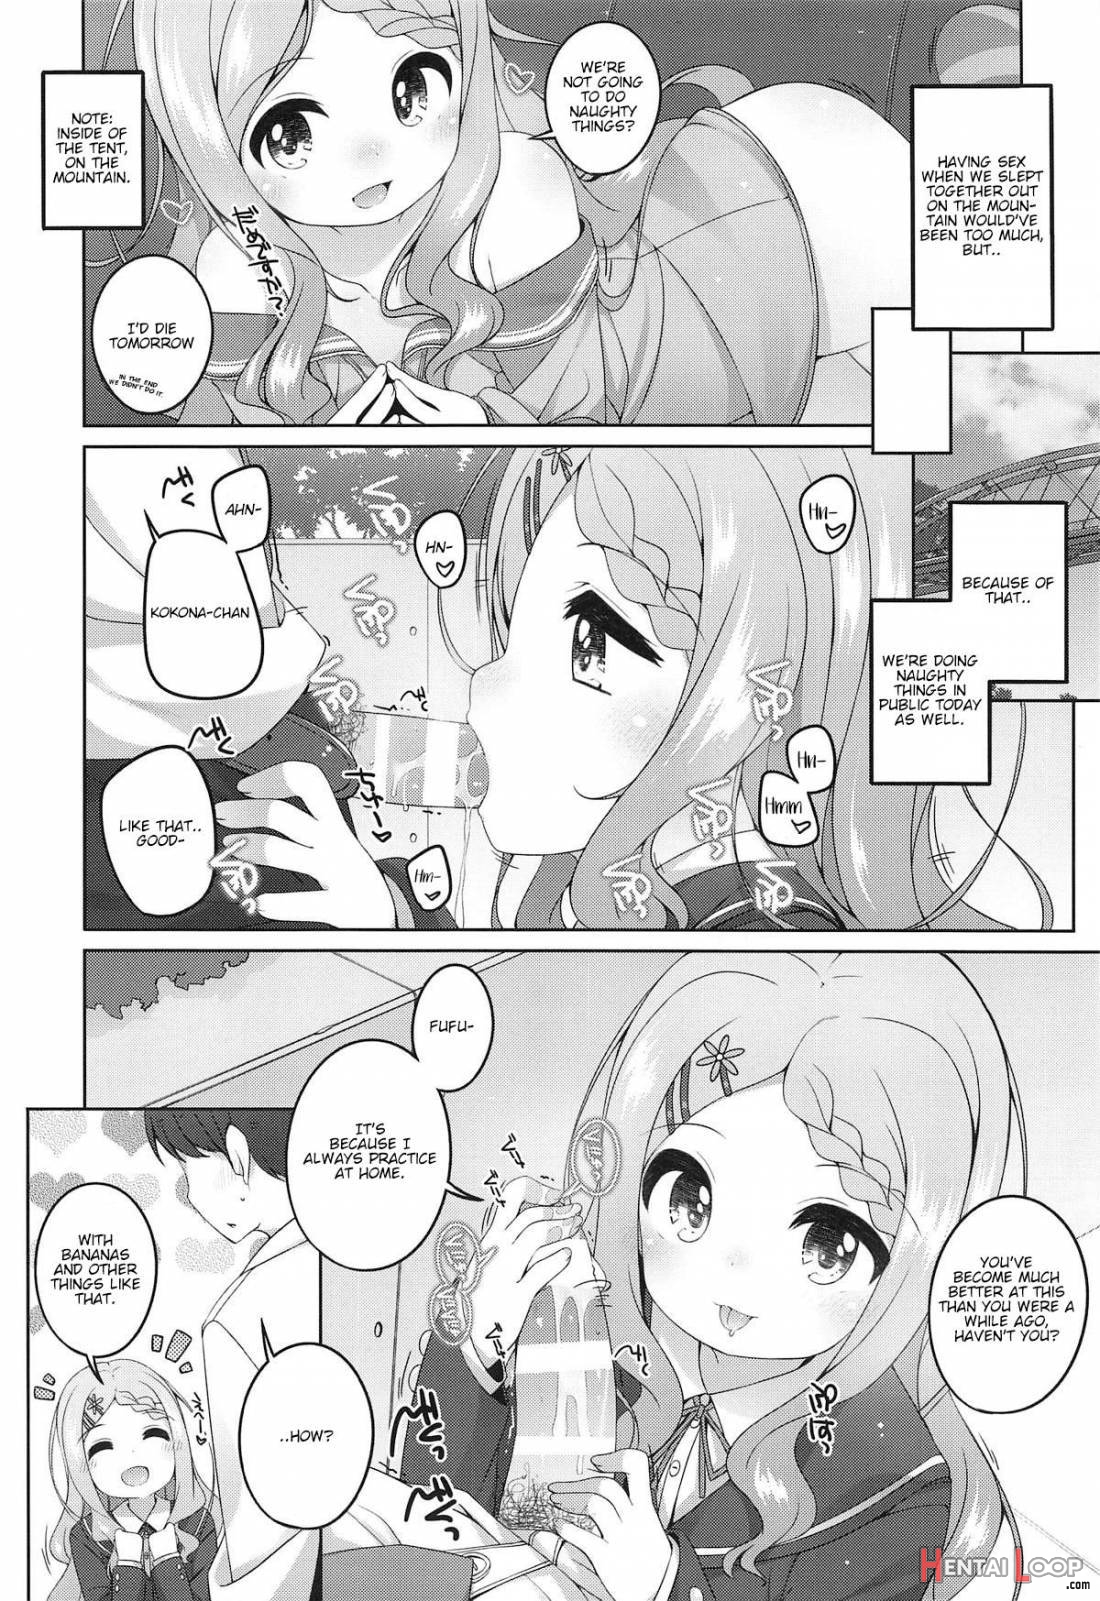 Kokona-chan Kawaii. page 6